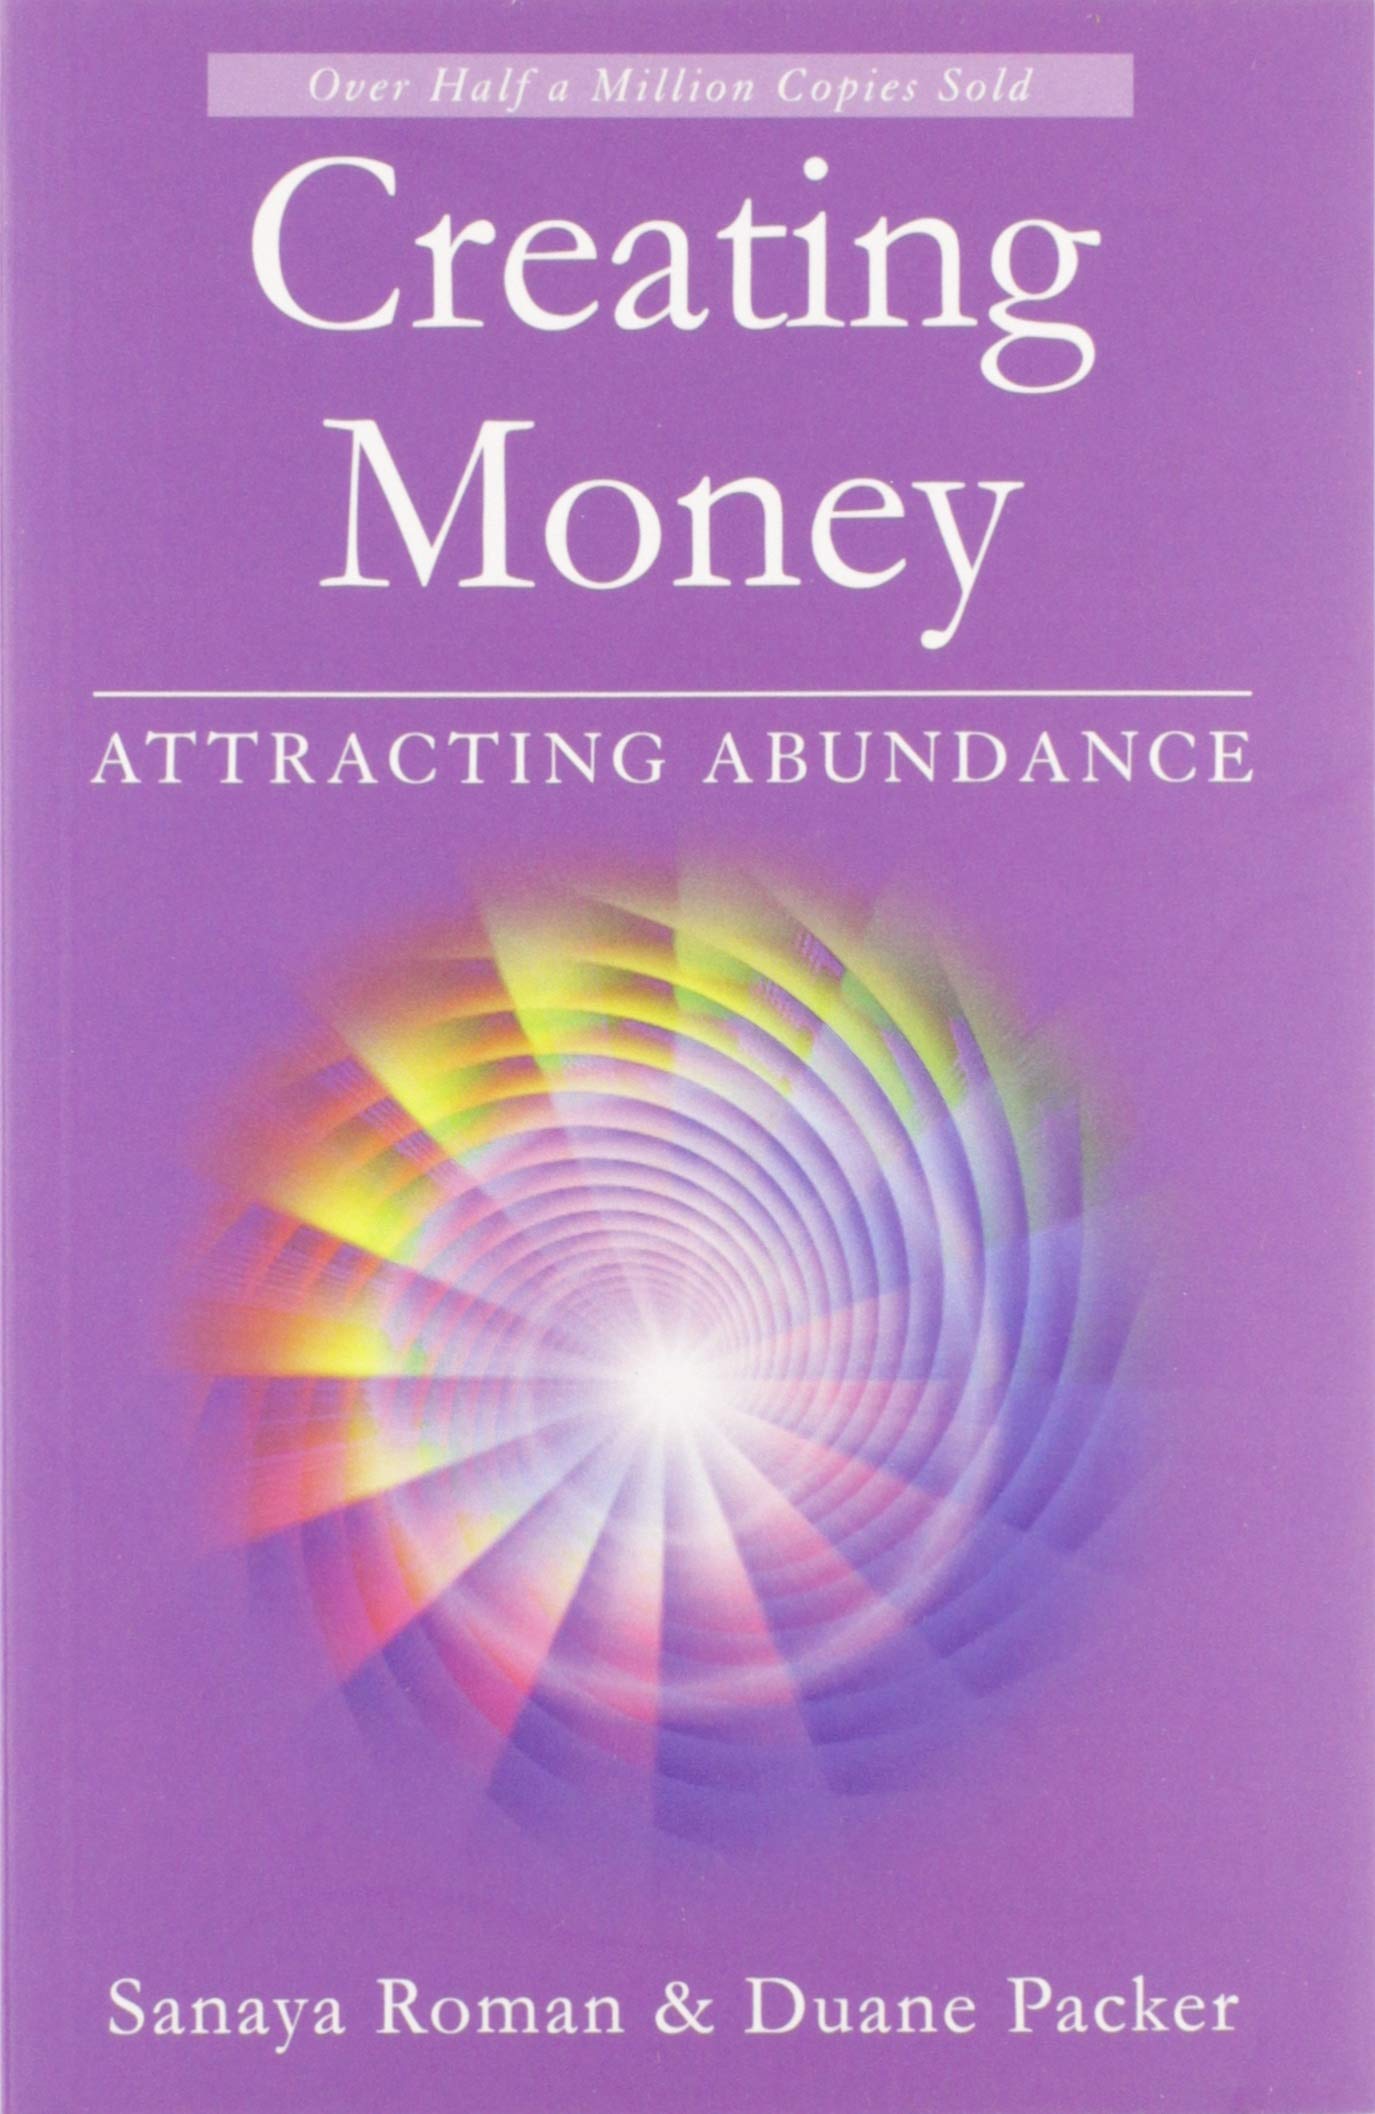 Duane Packer - DaBen - Sanaya Roman - Orin - Creating Money Attracting Abundance